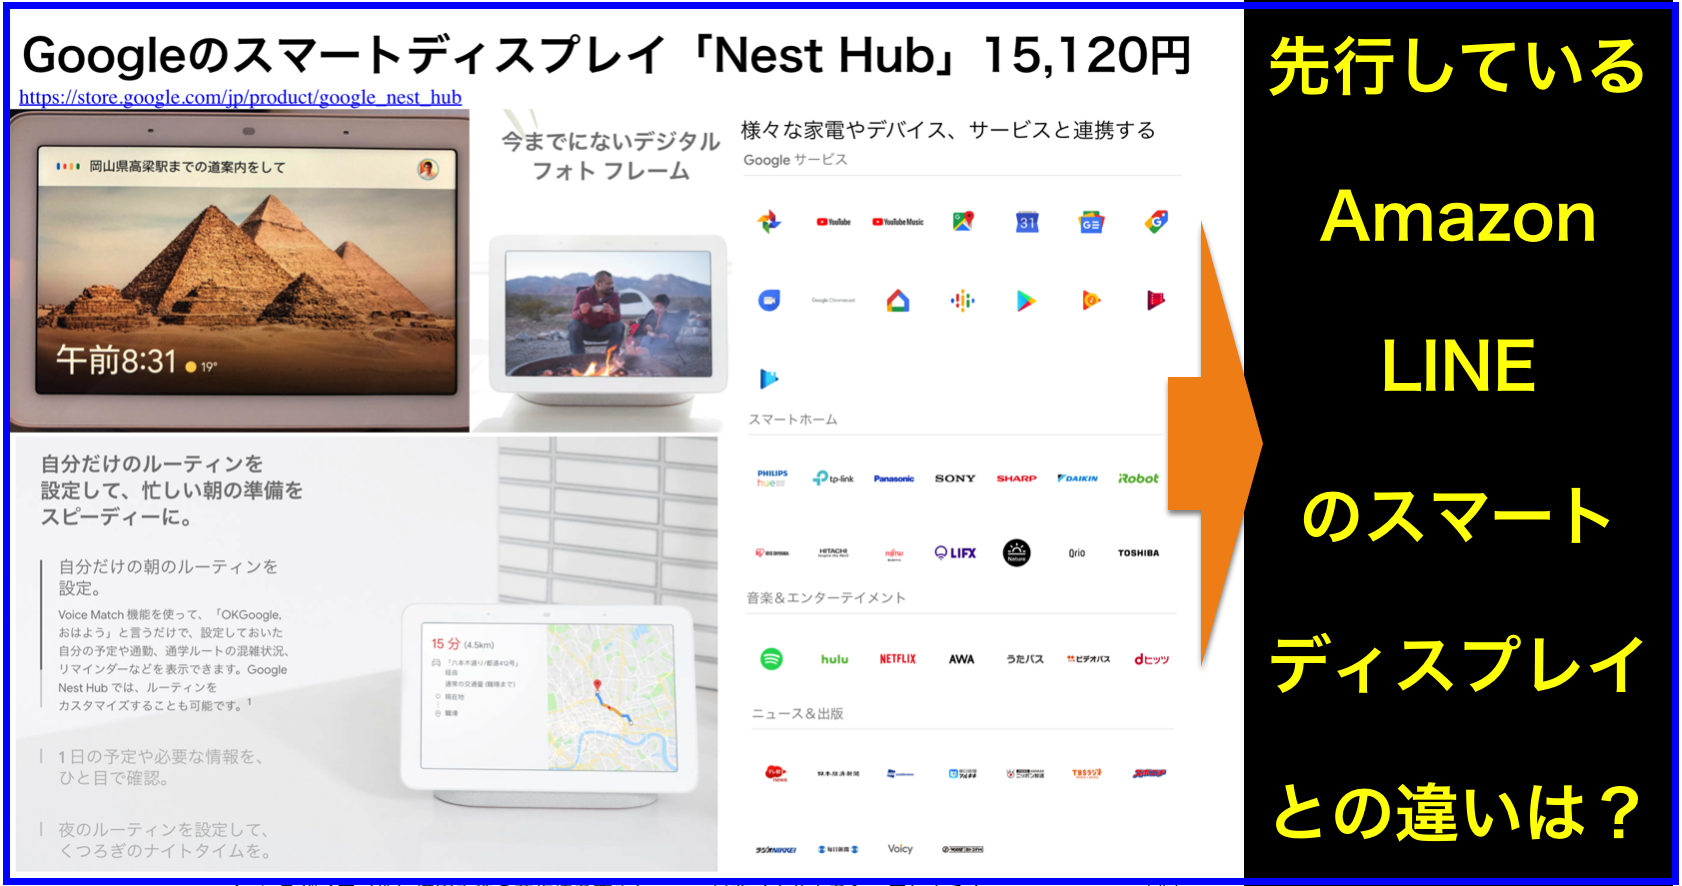 Googleスマートディスプレイ｢Nest Hub｣レビュー･長所短所